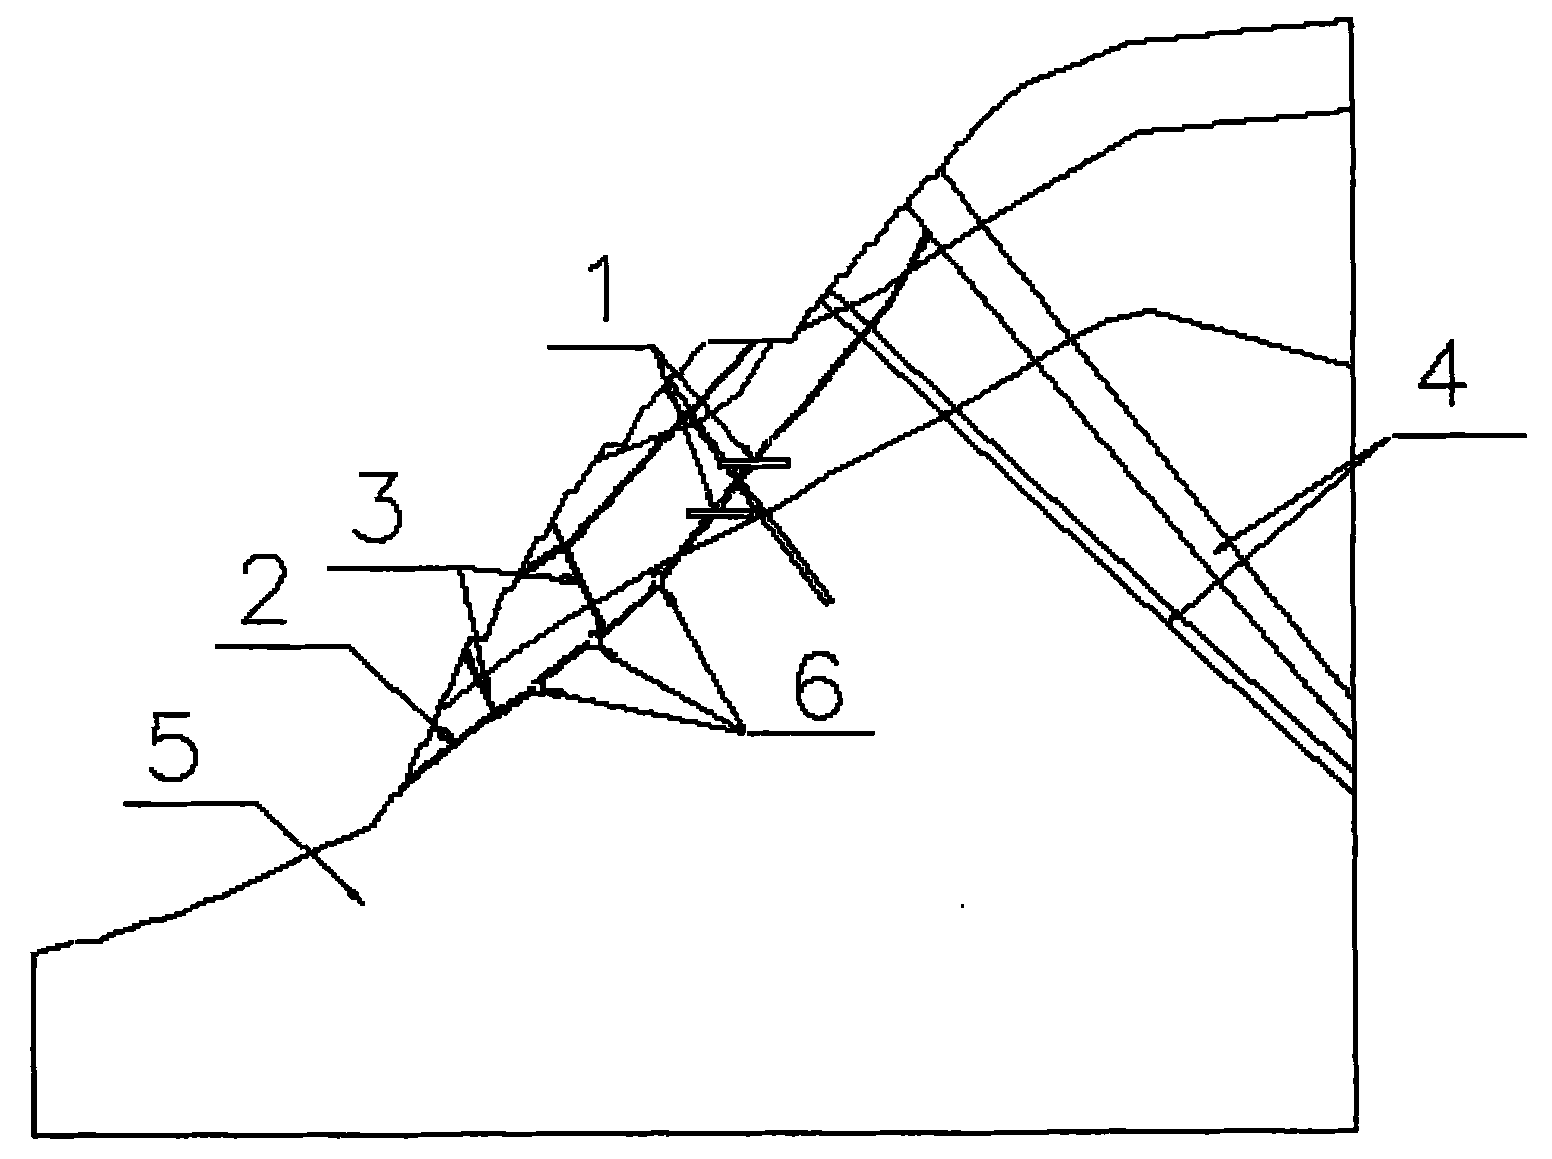 Method for designing anchoring hole structure for reinforcing rock slope